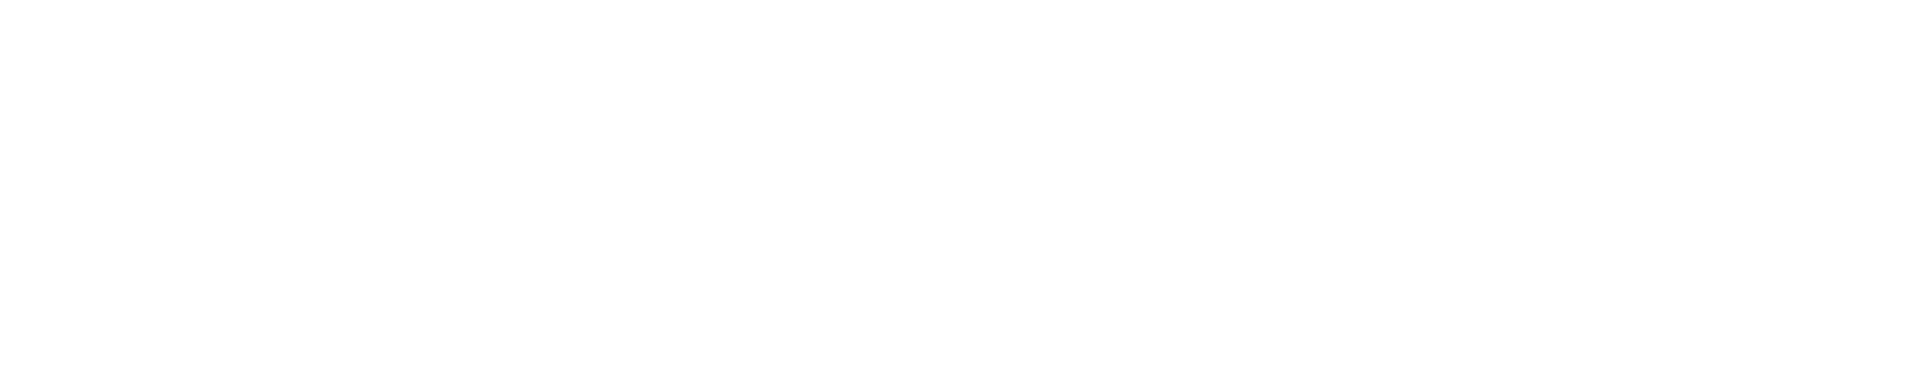 Arch&Living Logo in weiß